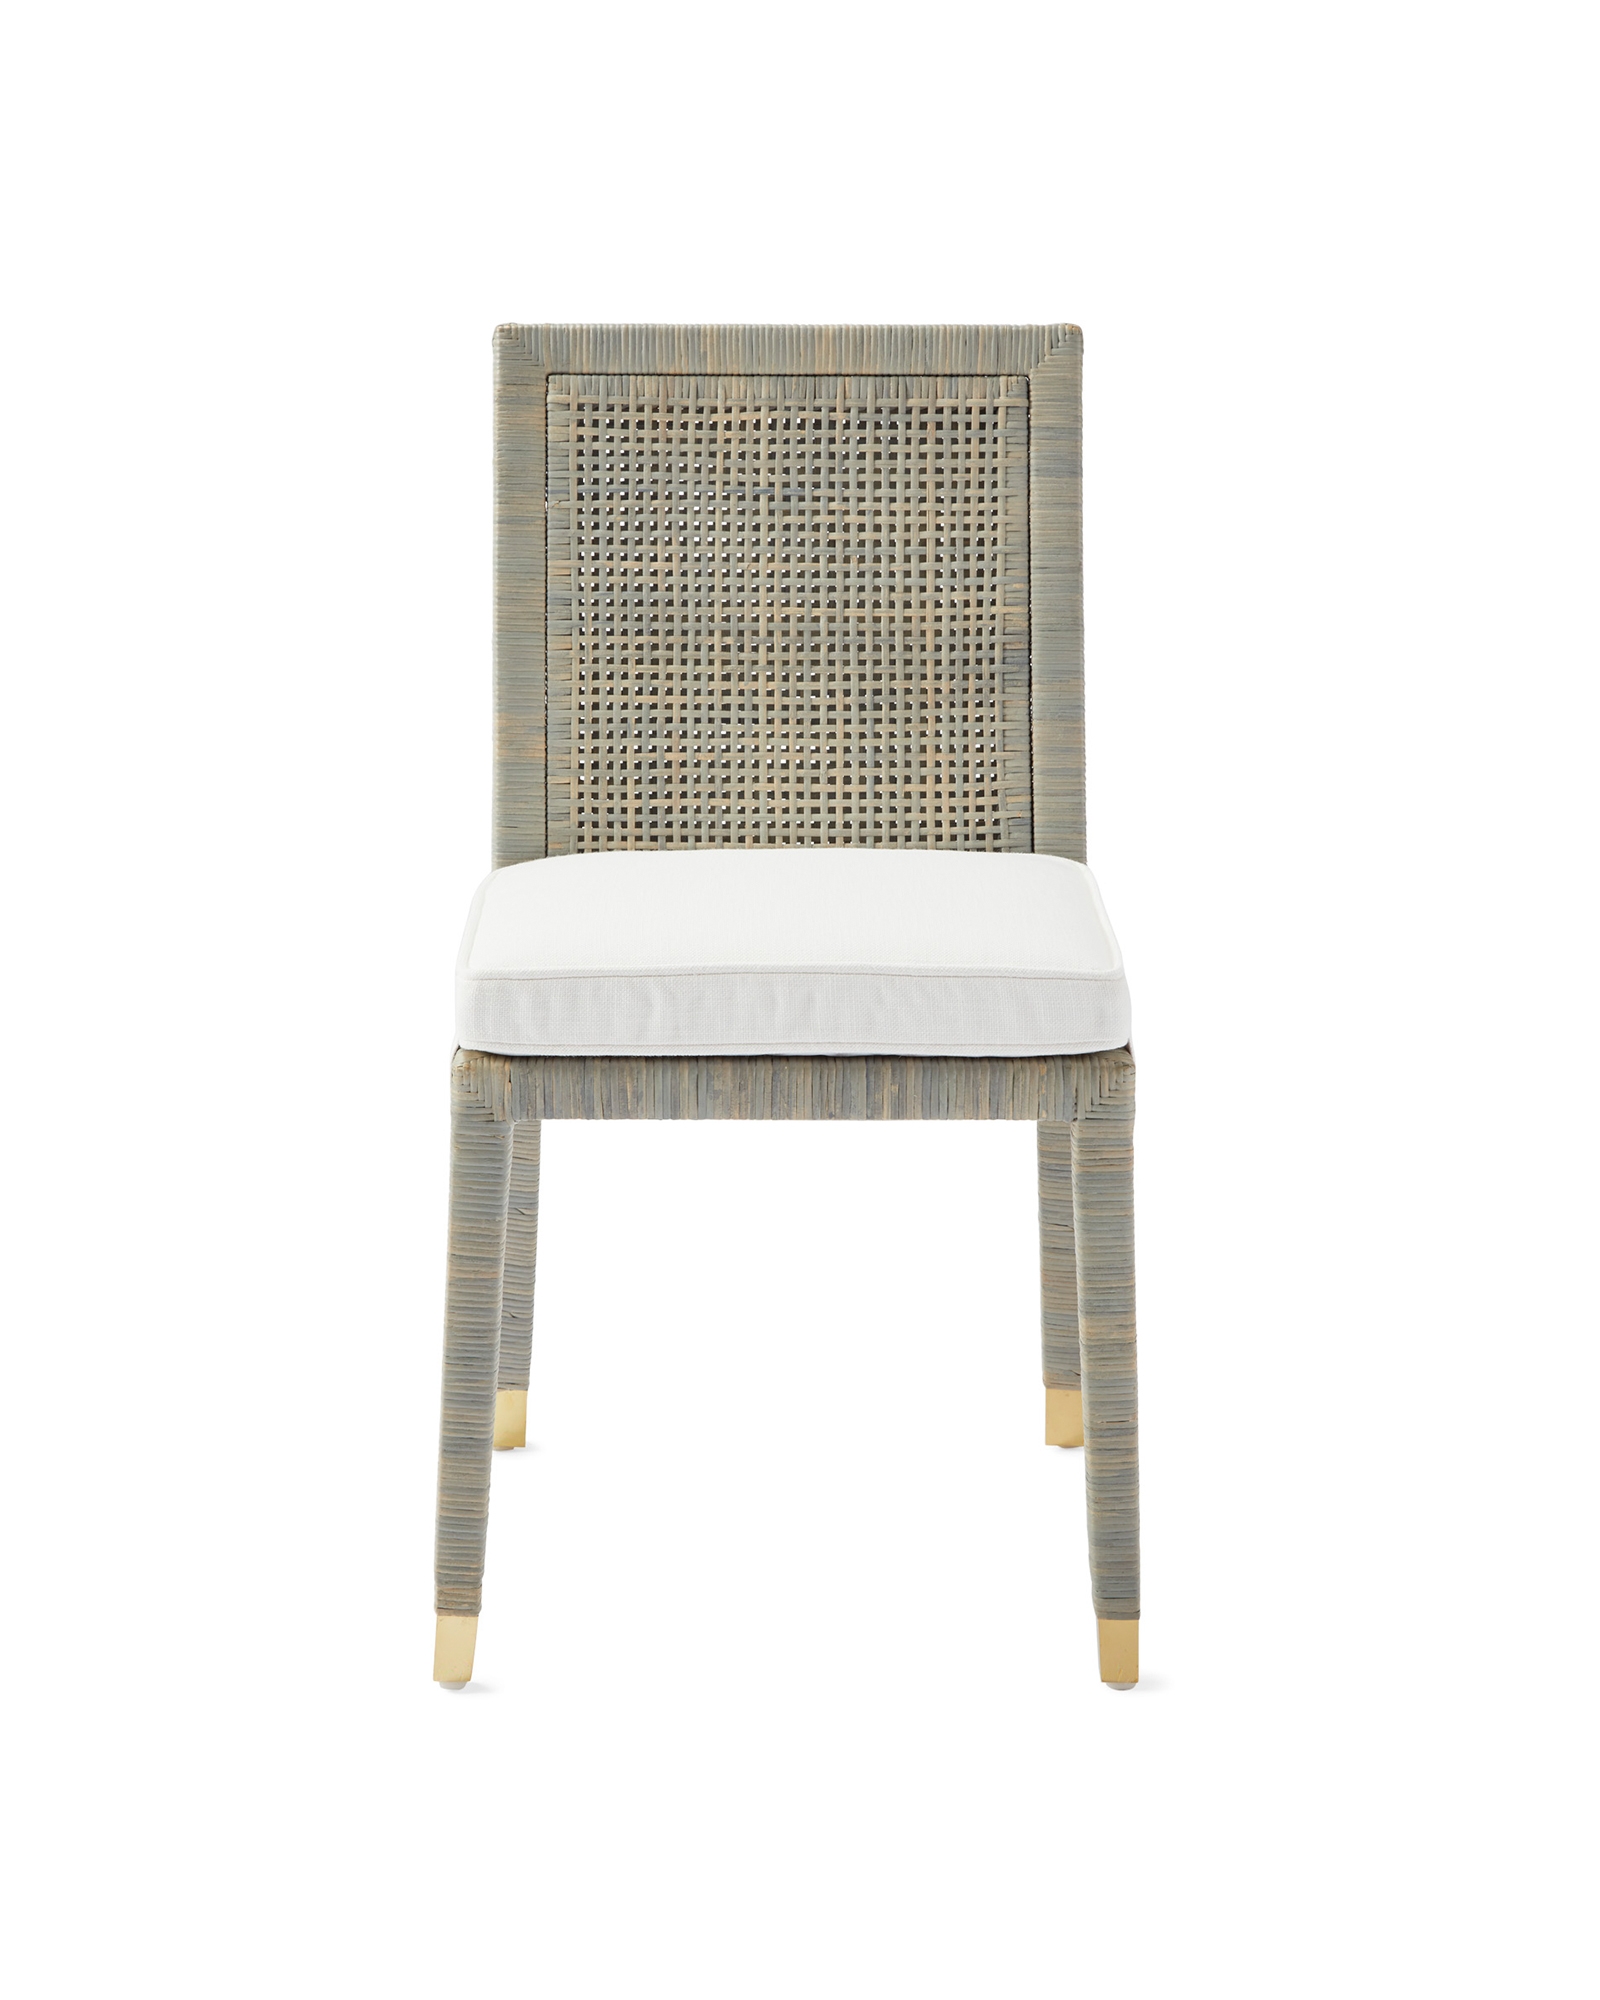 Balboa Side Chair - Mist, Chalk - Image 2